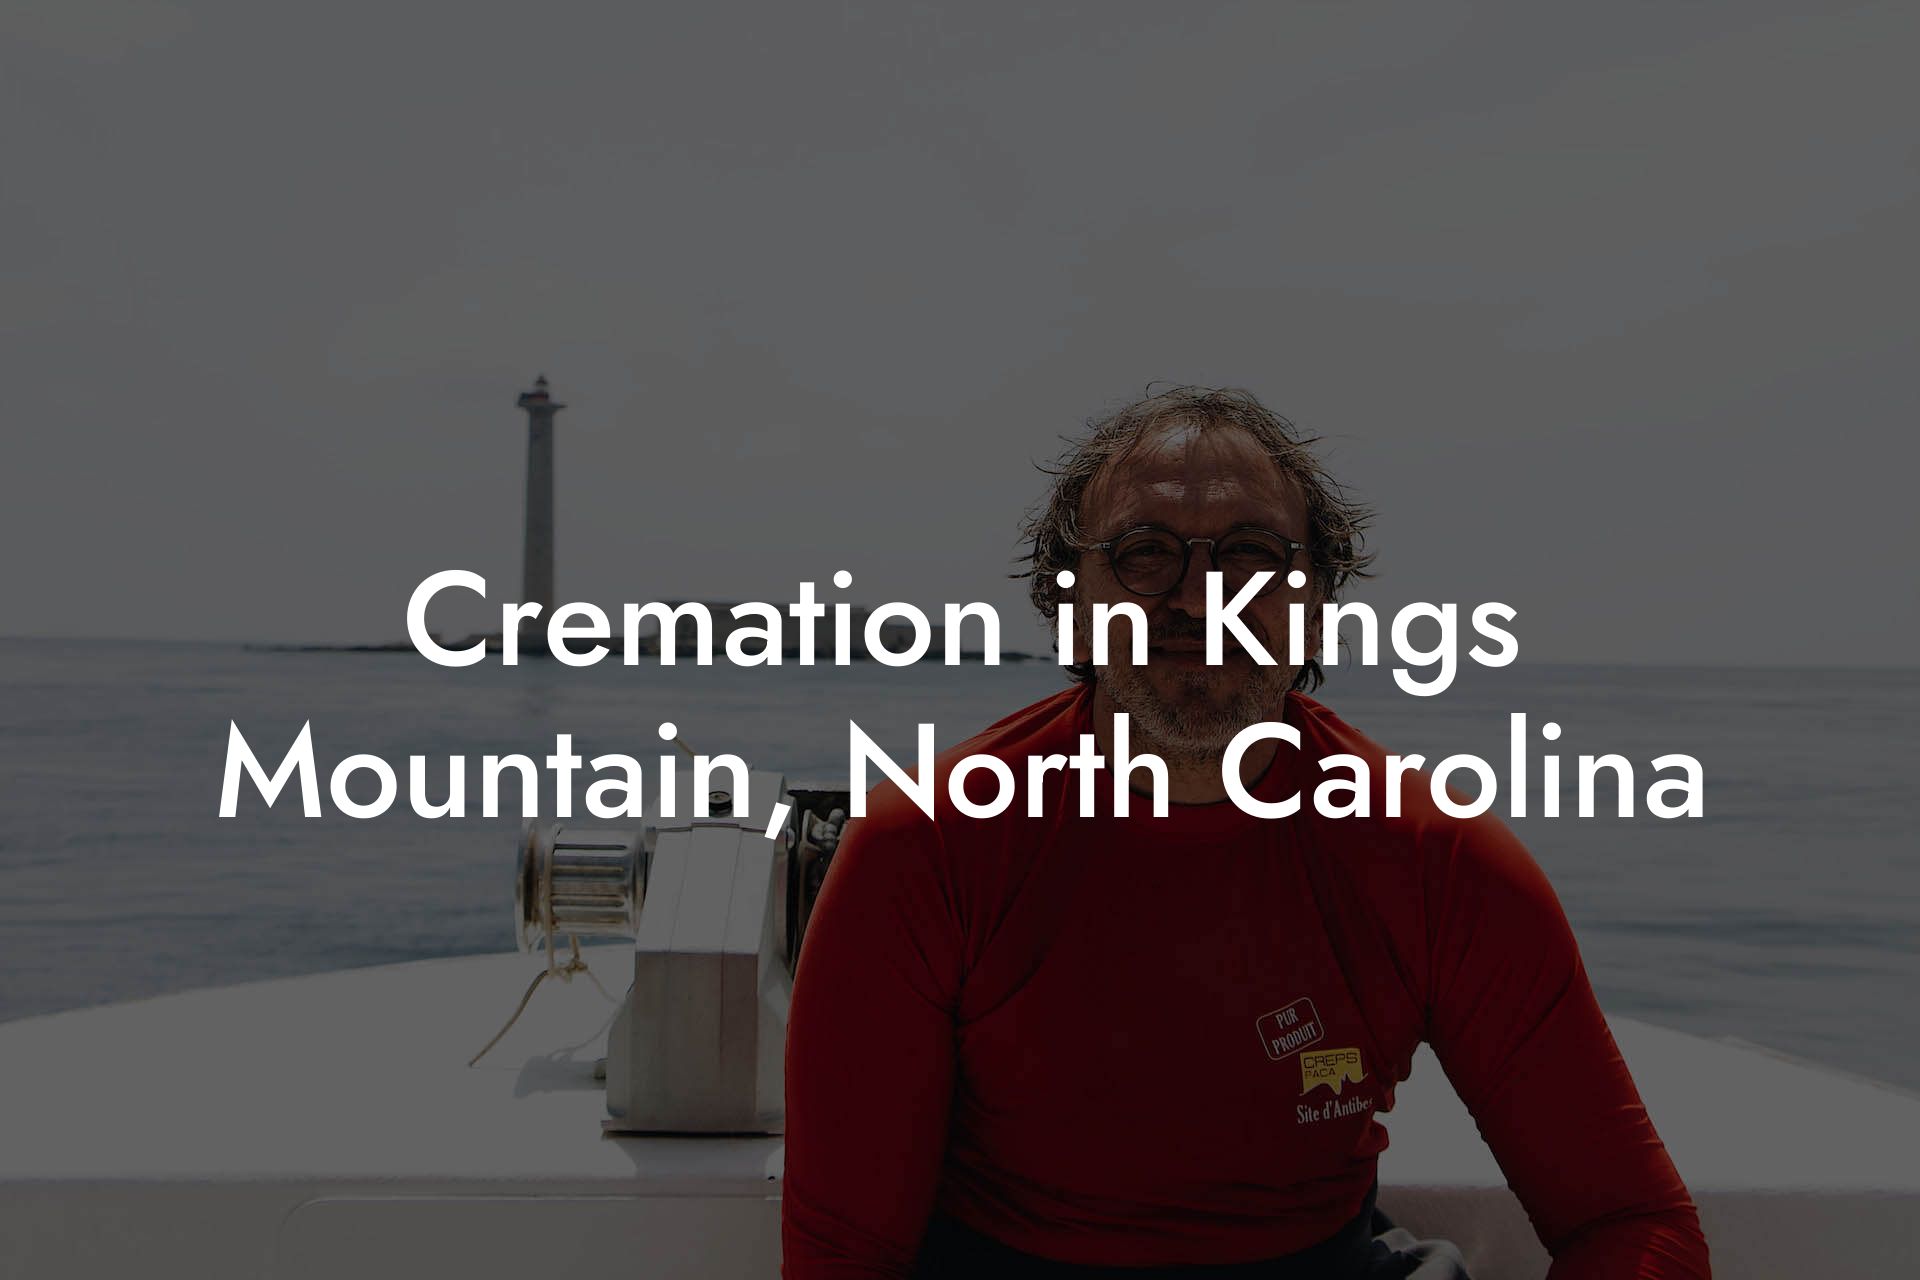 Cremation in Kings Mountain, North Carolina